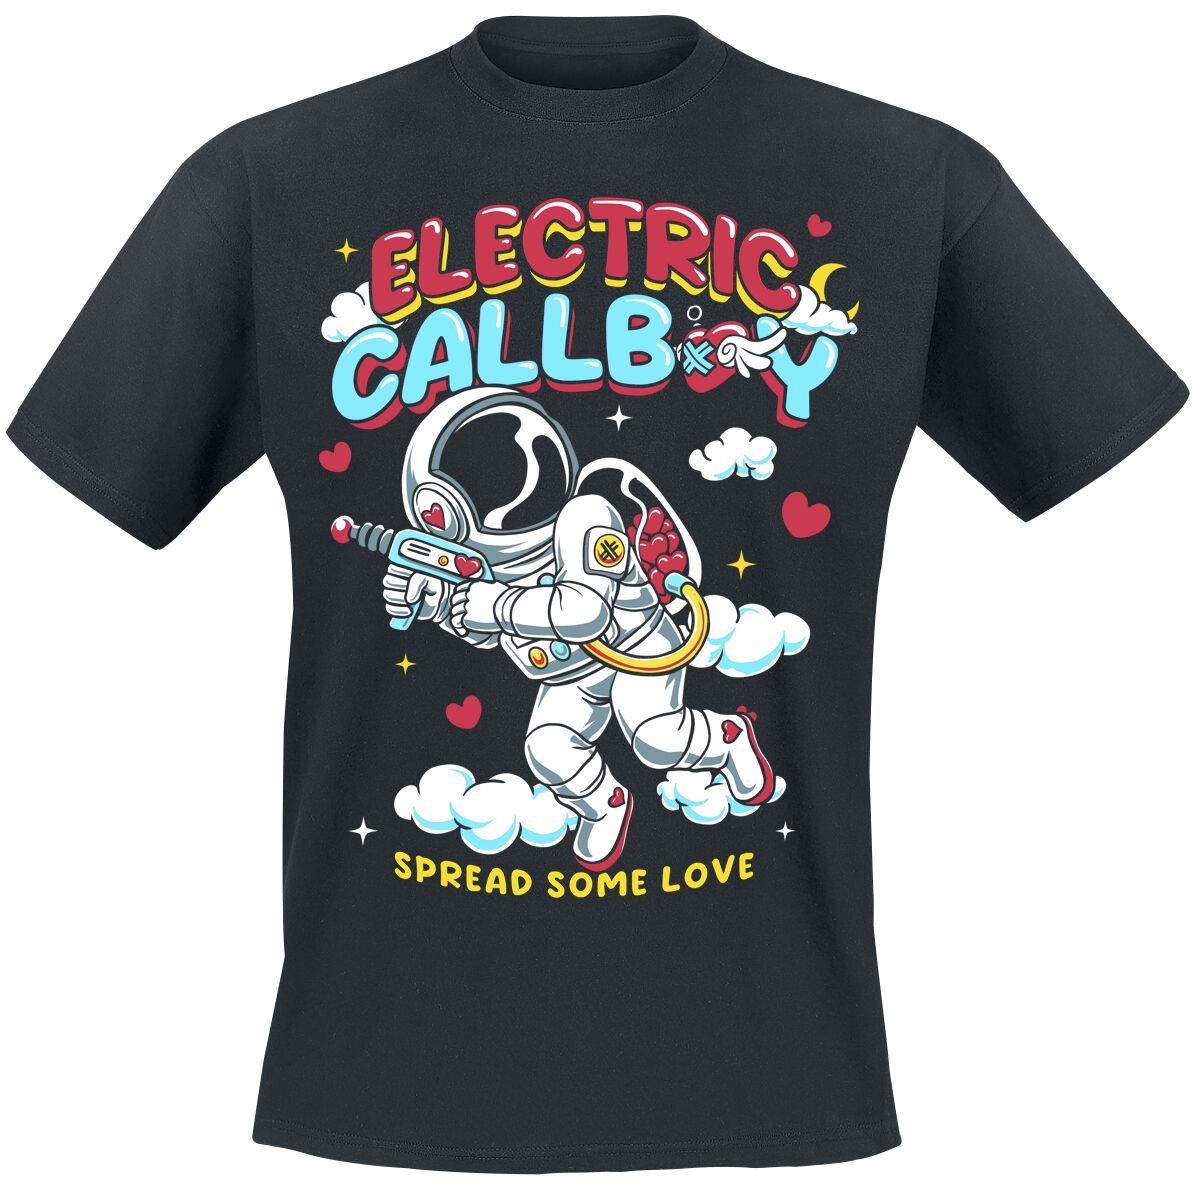 Electric Callboy Spread Some Love T-Shirt schwarz in 3XL